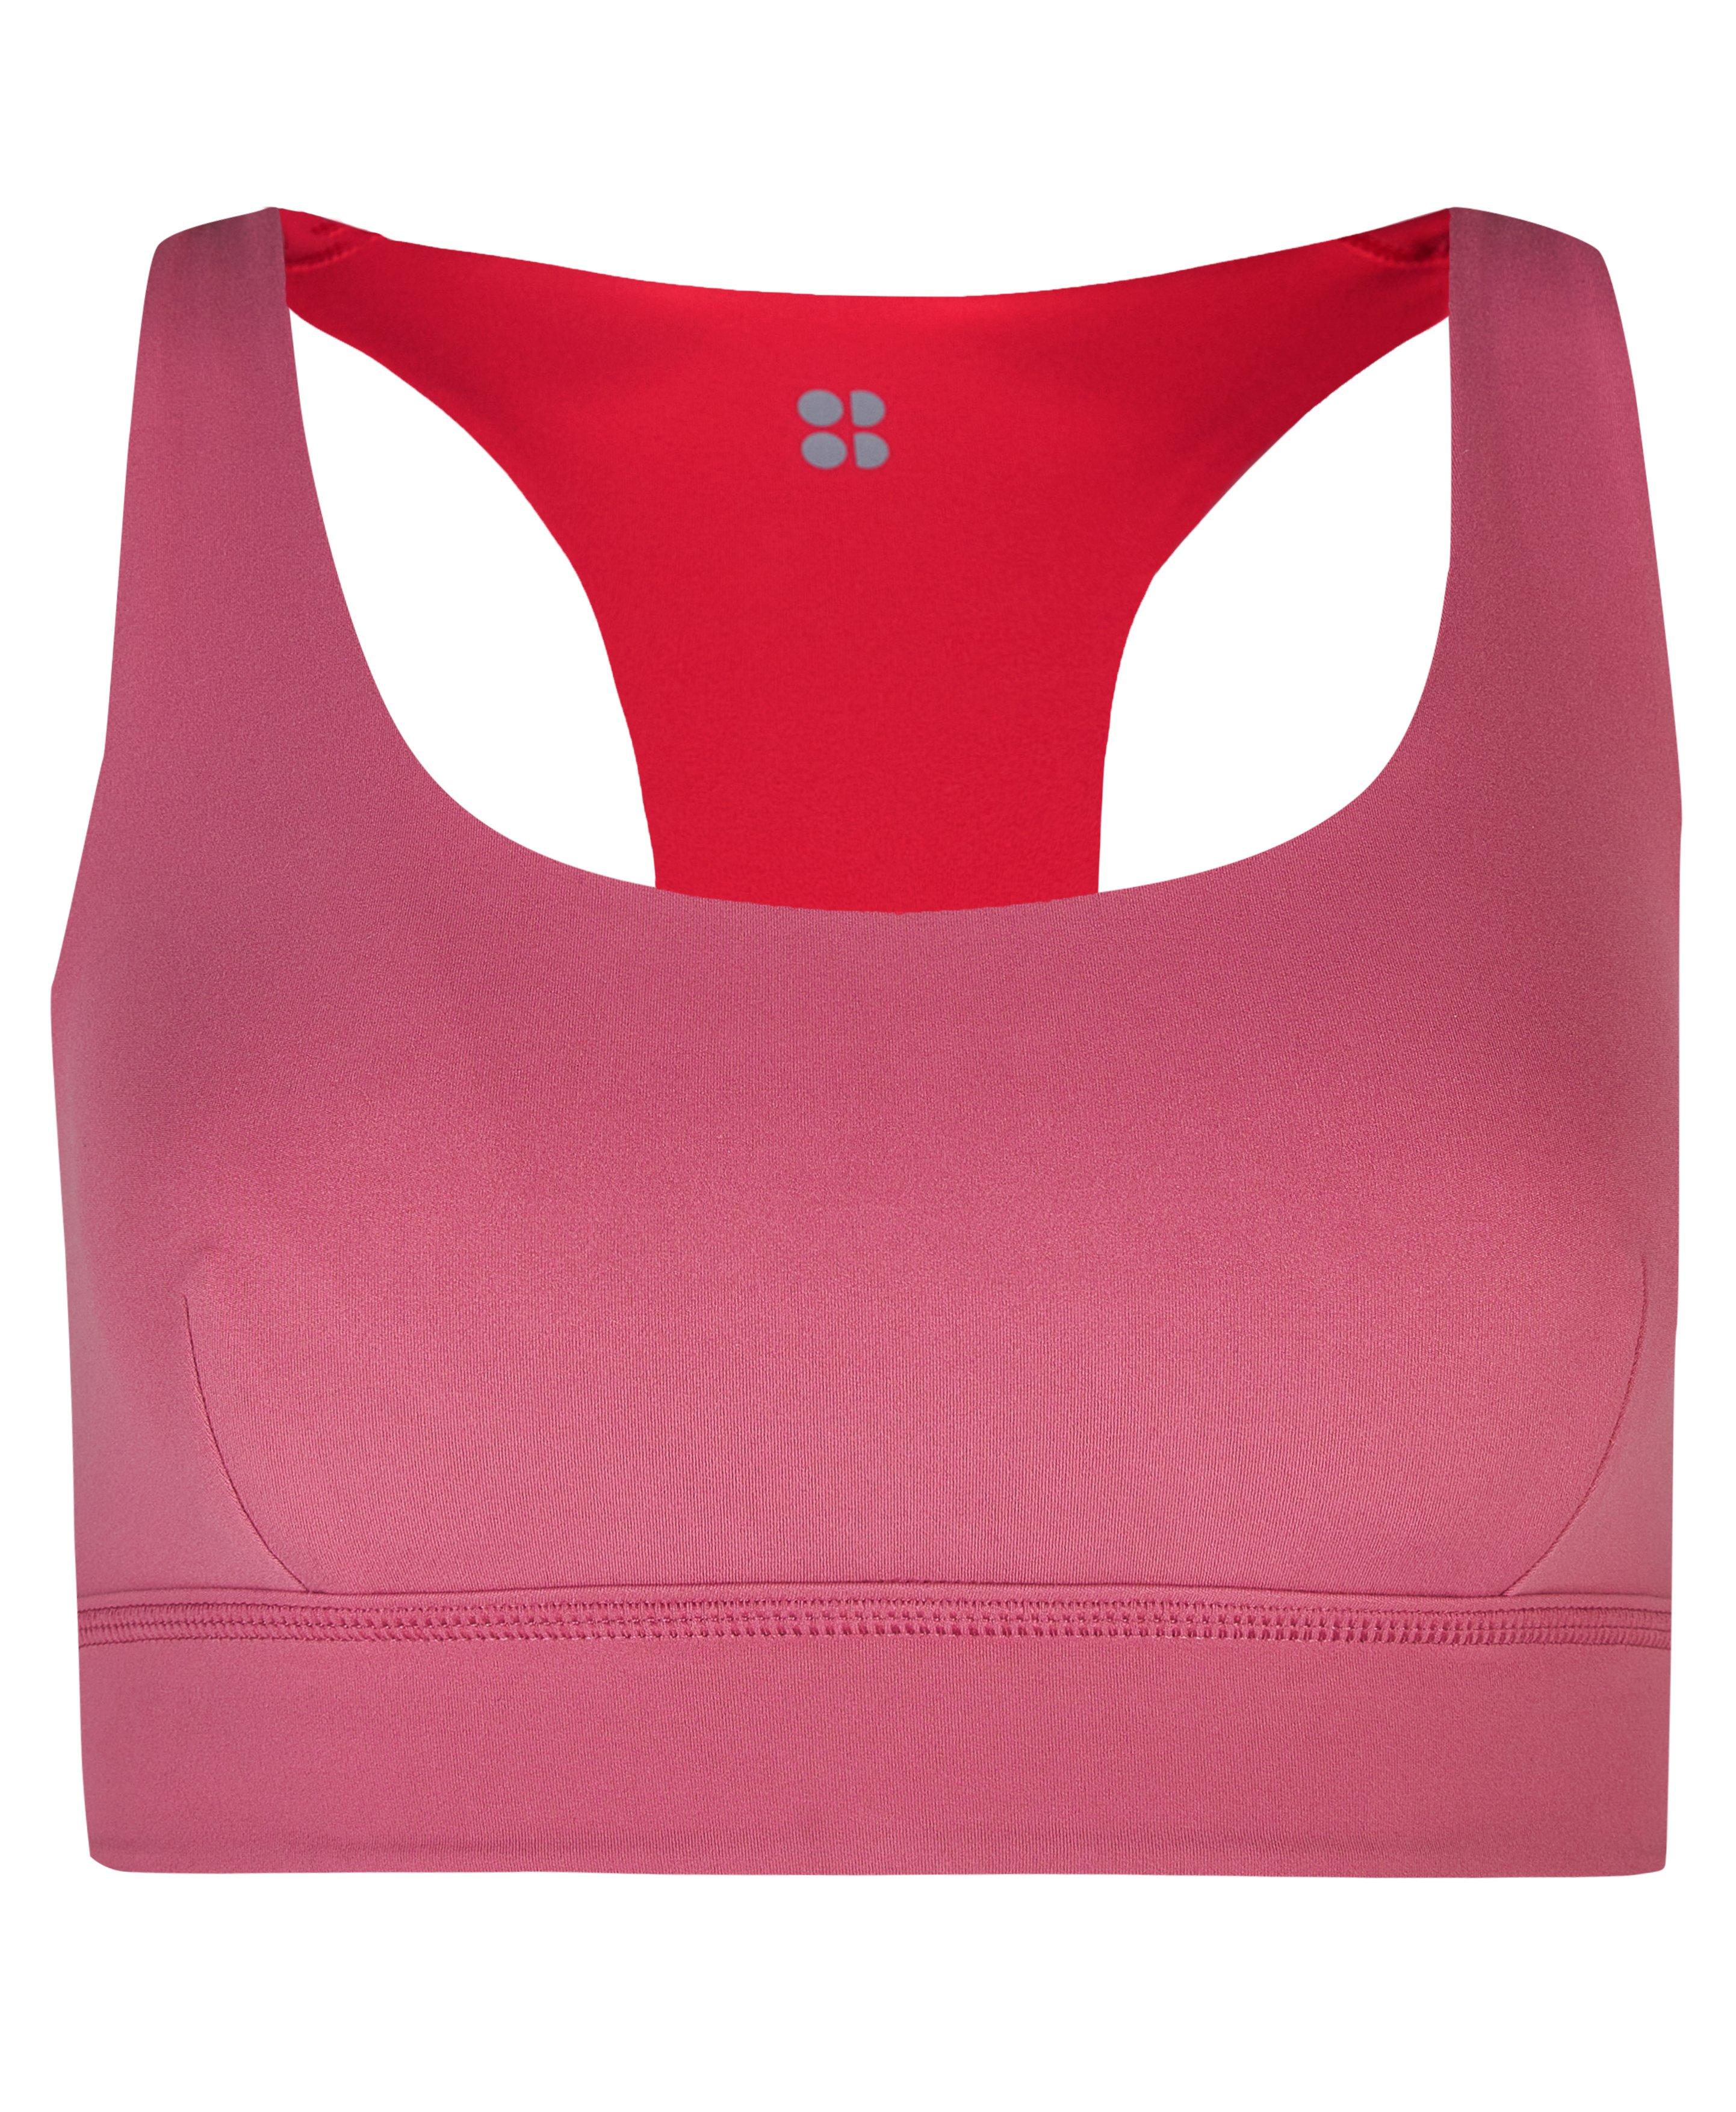 Sweaty Betty Stamina Dusty Rose Pink Compression Yoga Running Bra Medium M  - $29 - From Fried